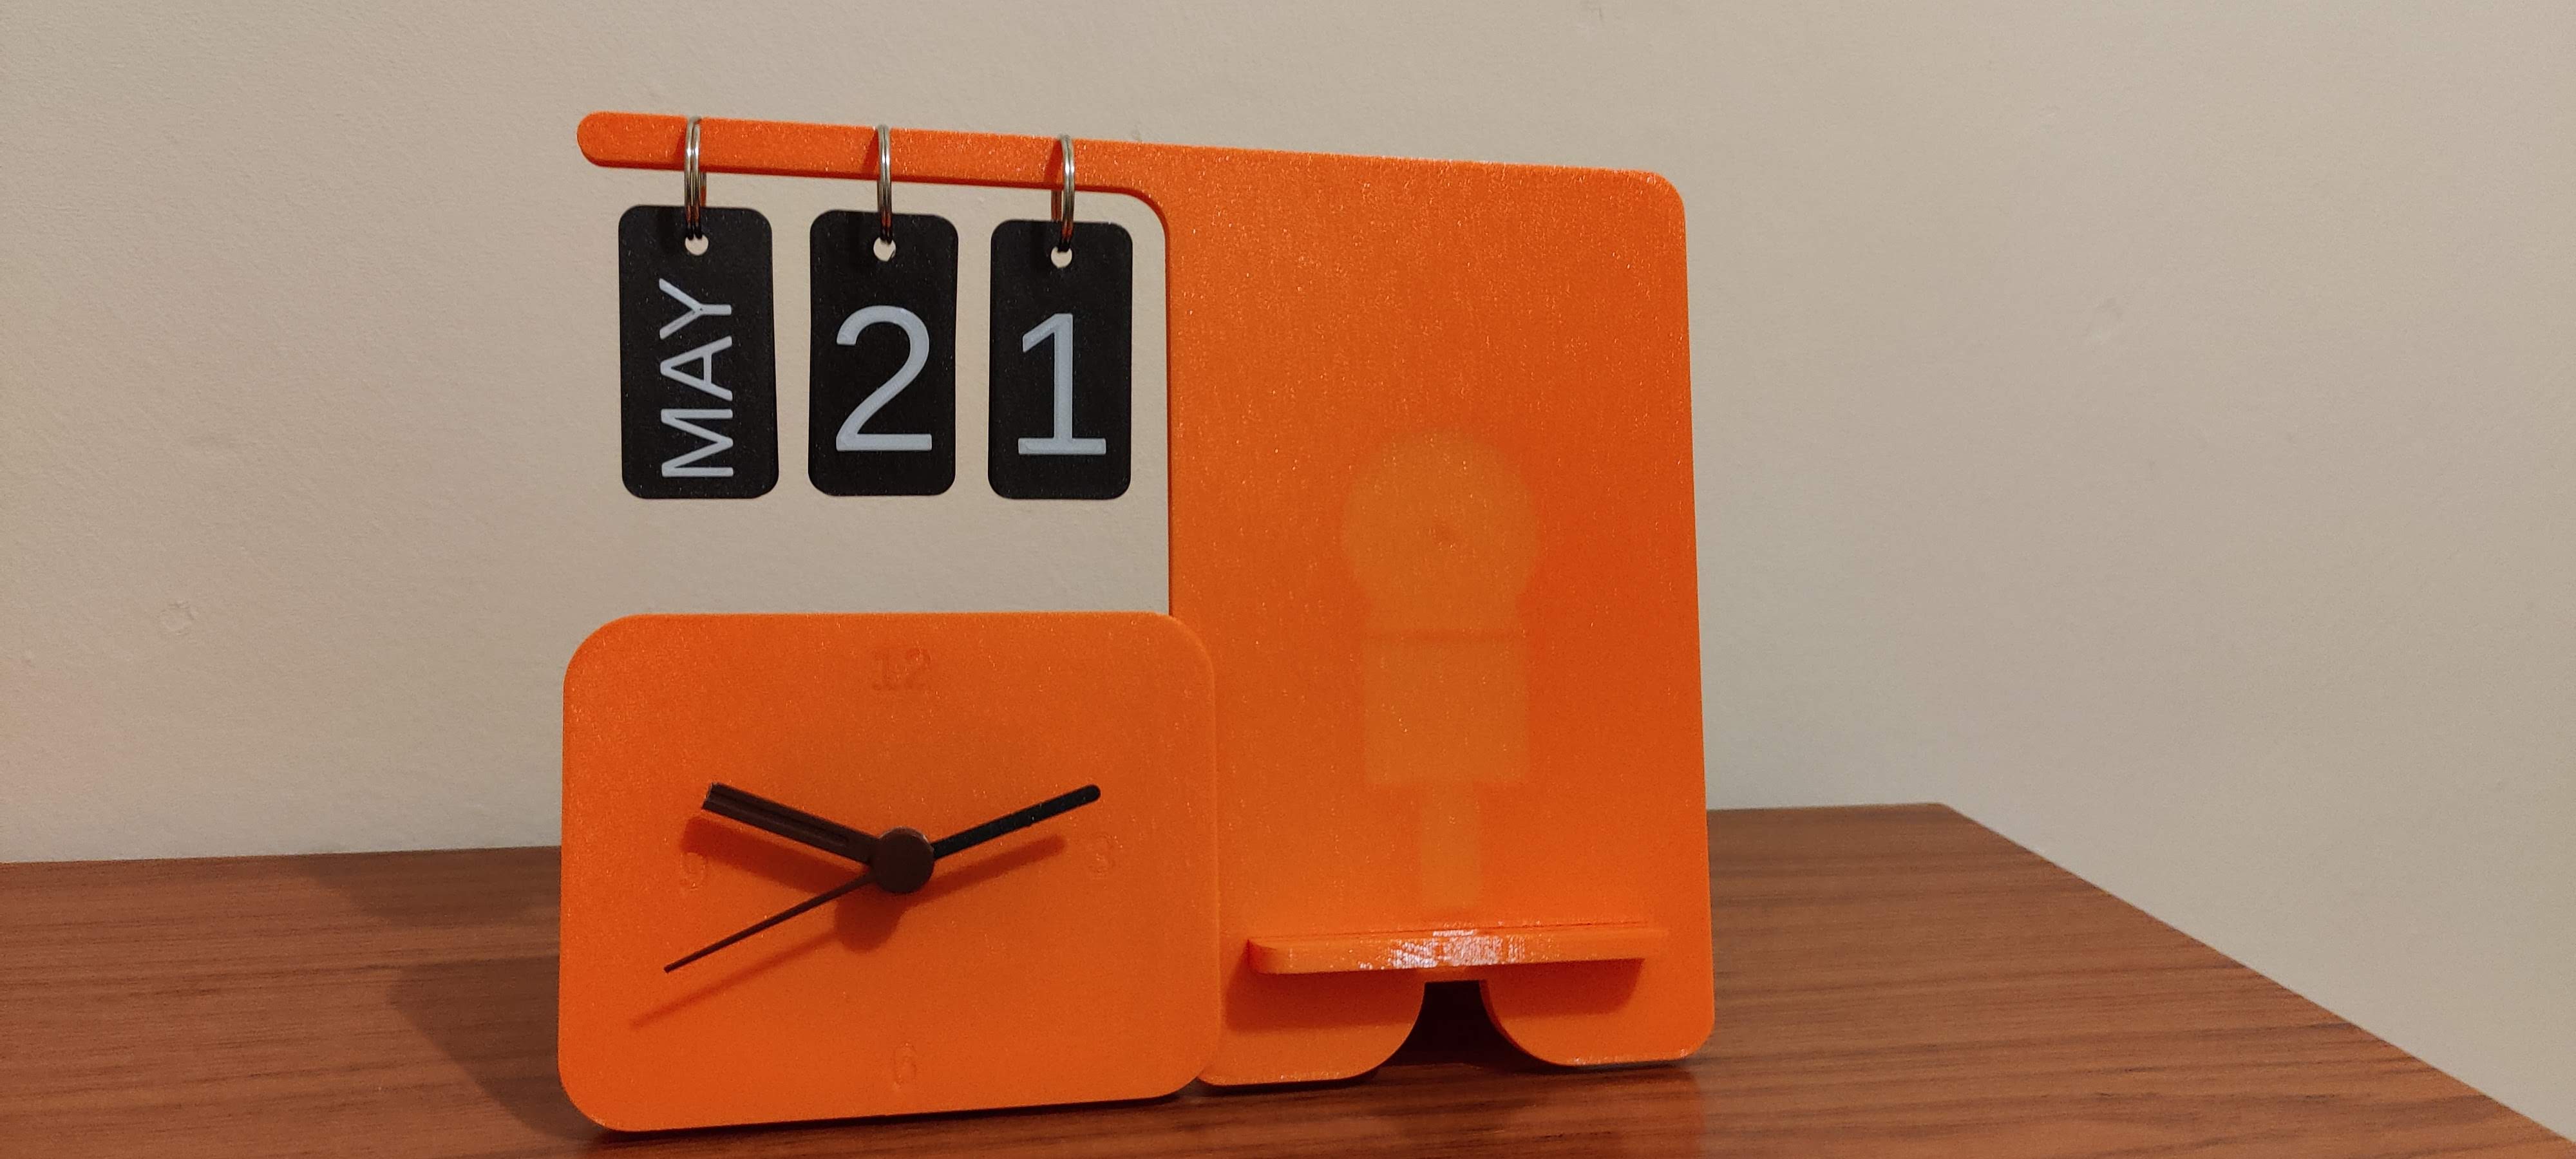 Customizable clock calendar with phone stand.